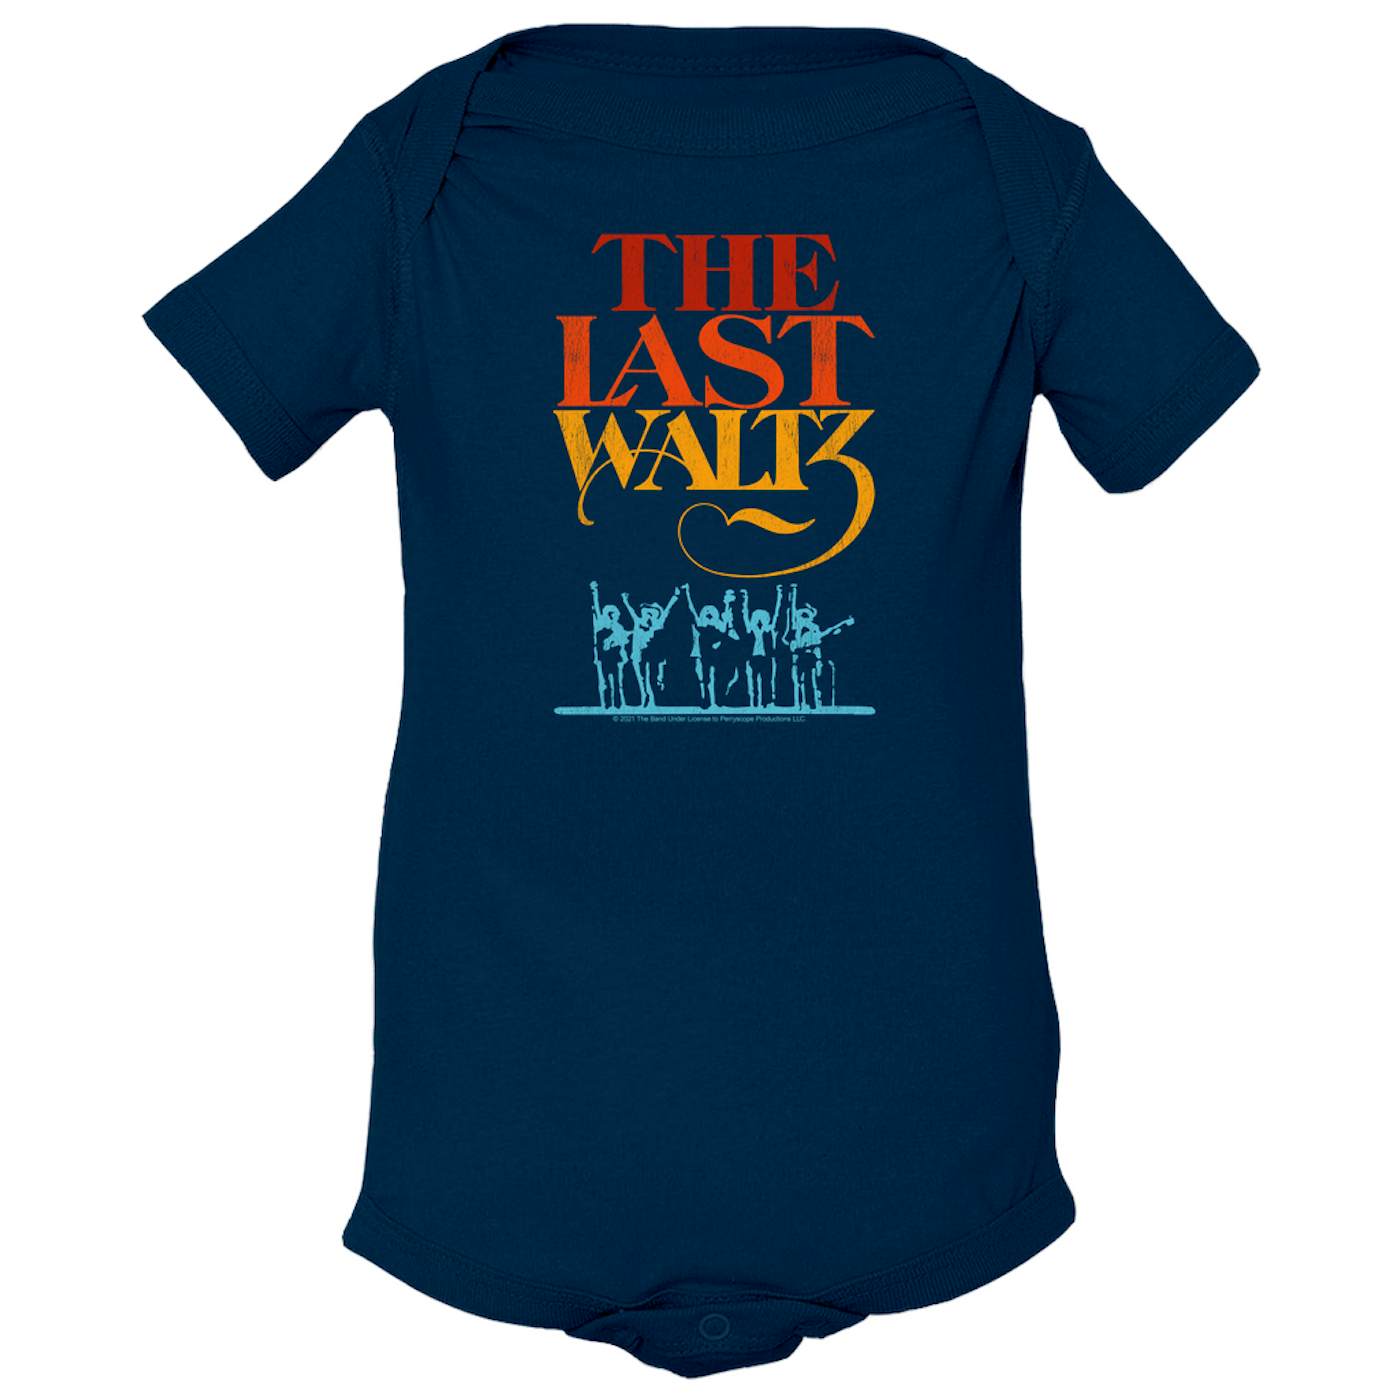 The Band Short Sleeve Bodysuit | The Last Waltz Movie Logo The Band Bodysuit (Merchbar Exclusive)